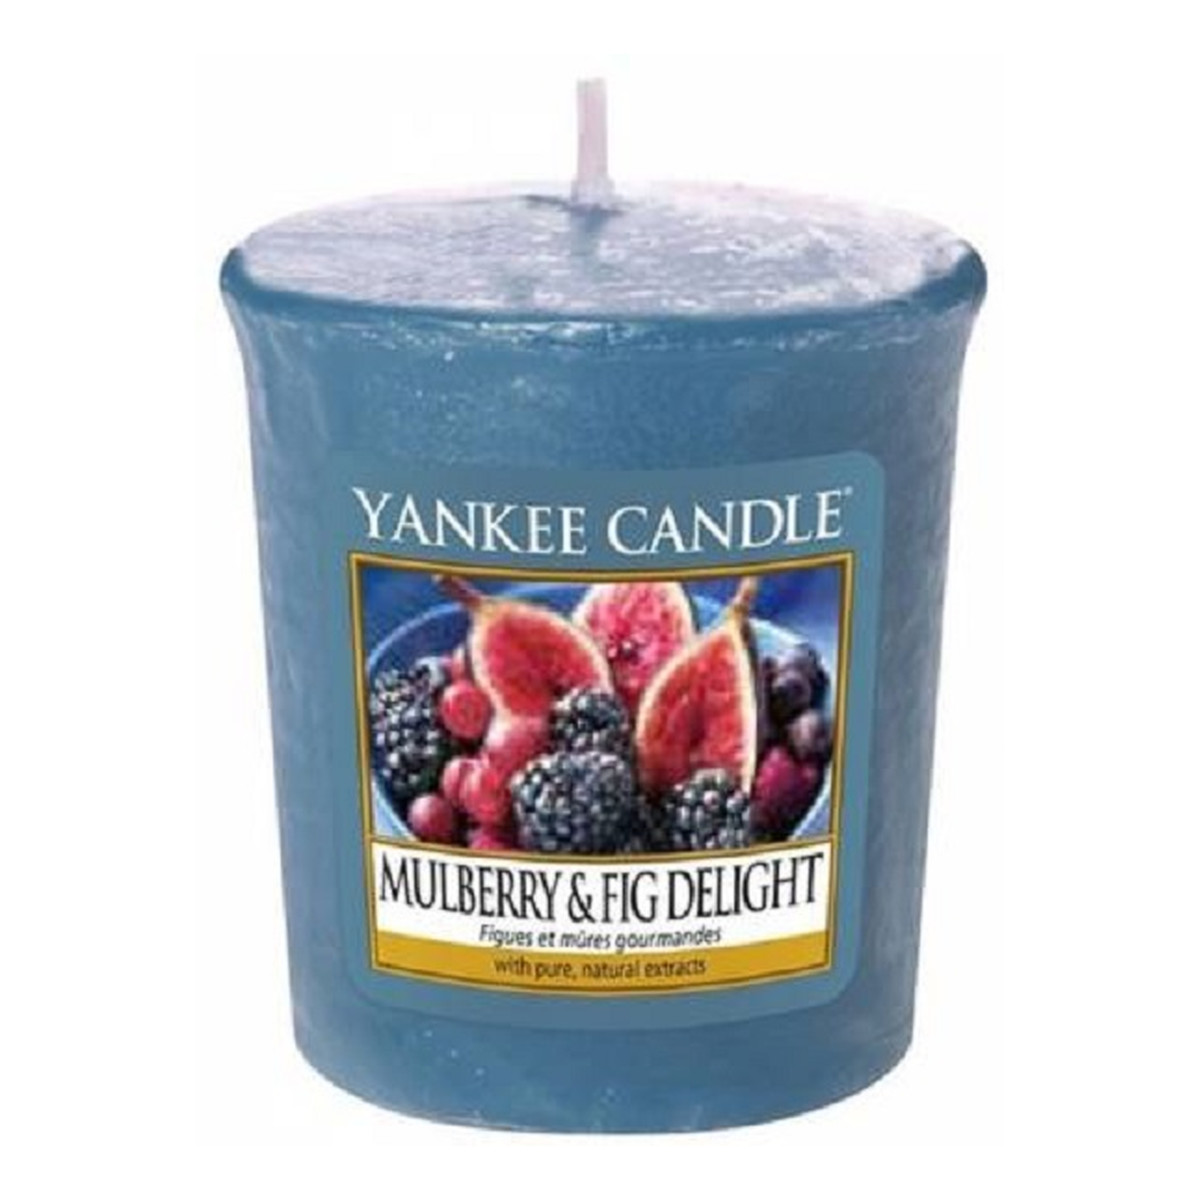 Yankee Candle Świeca zapachowa sampler mulberry & fig delight 49g